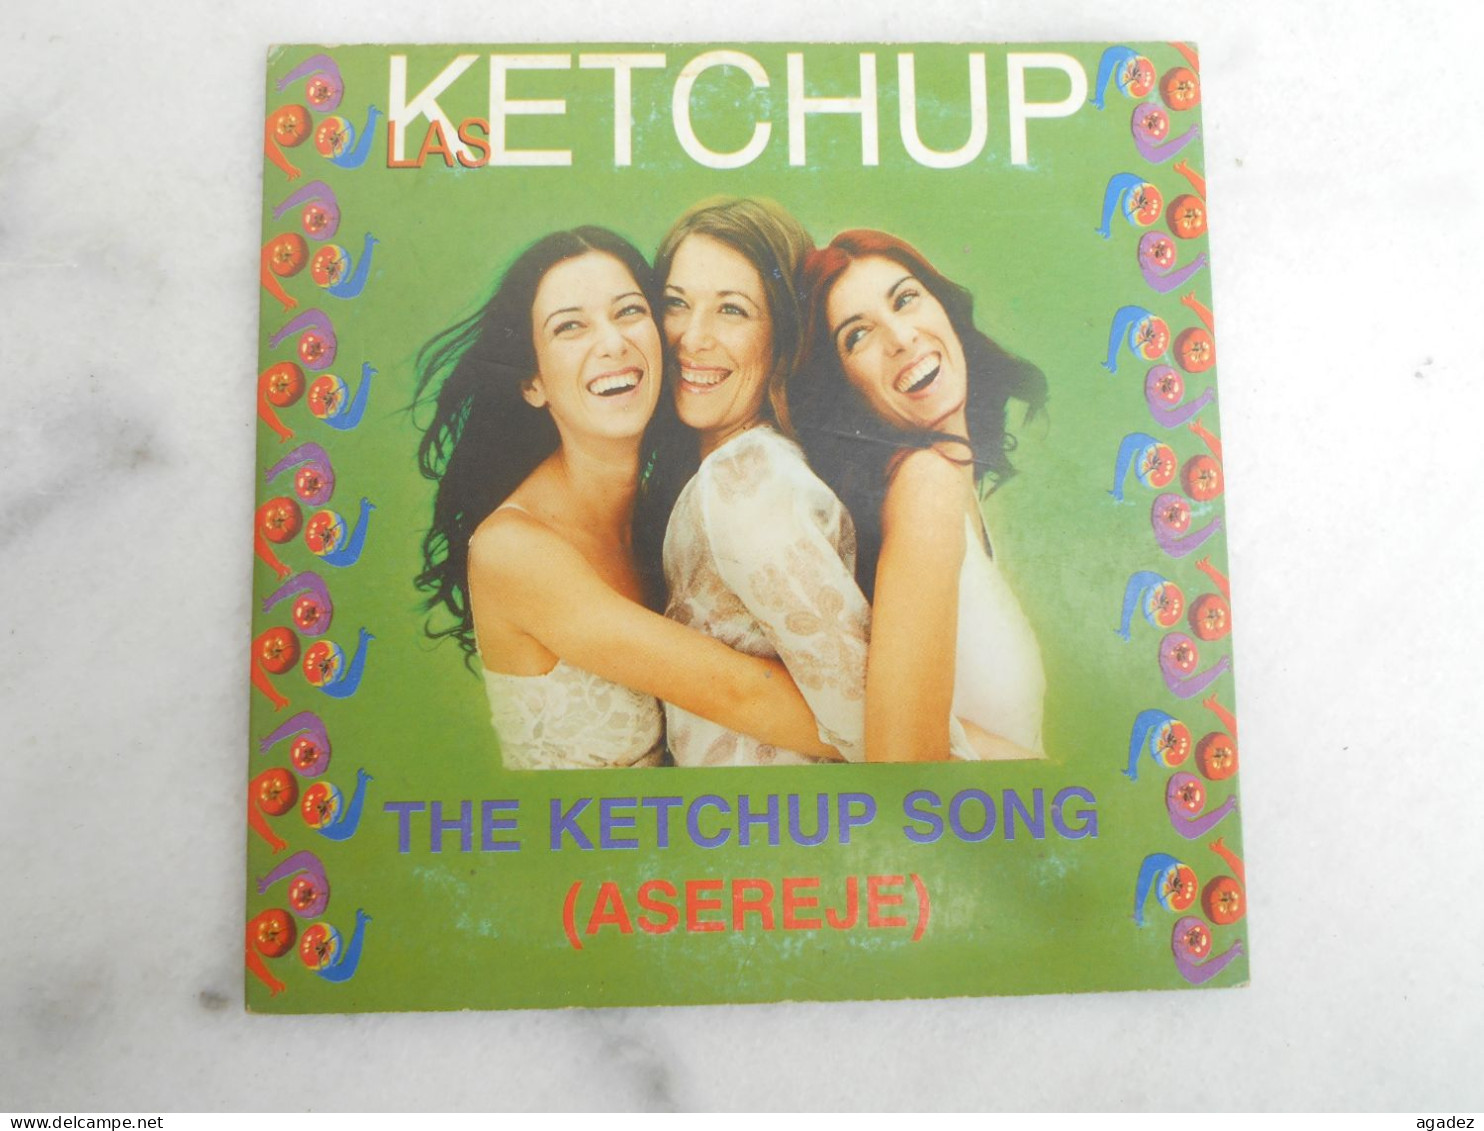 CD Single Ketchup - Autres - Musique Anglaise